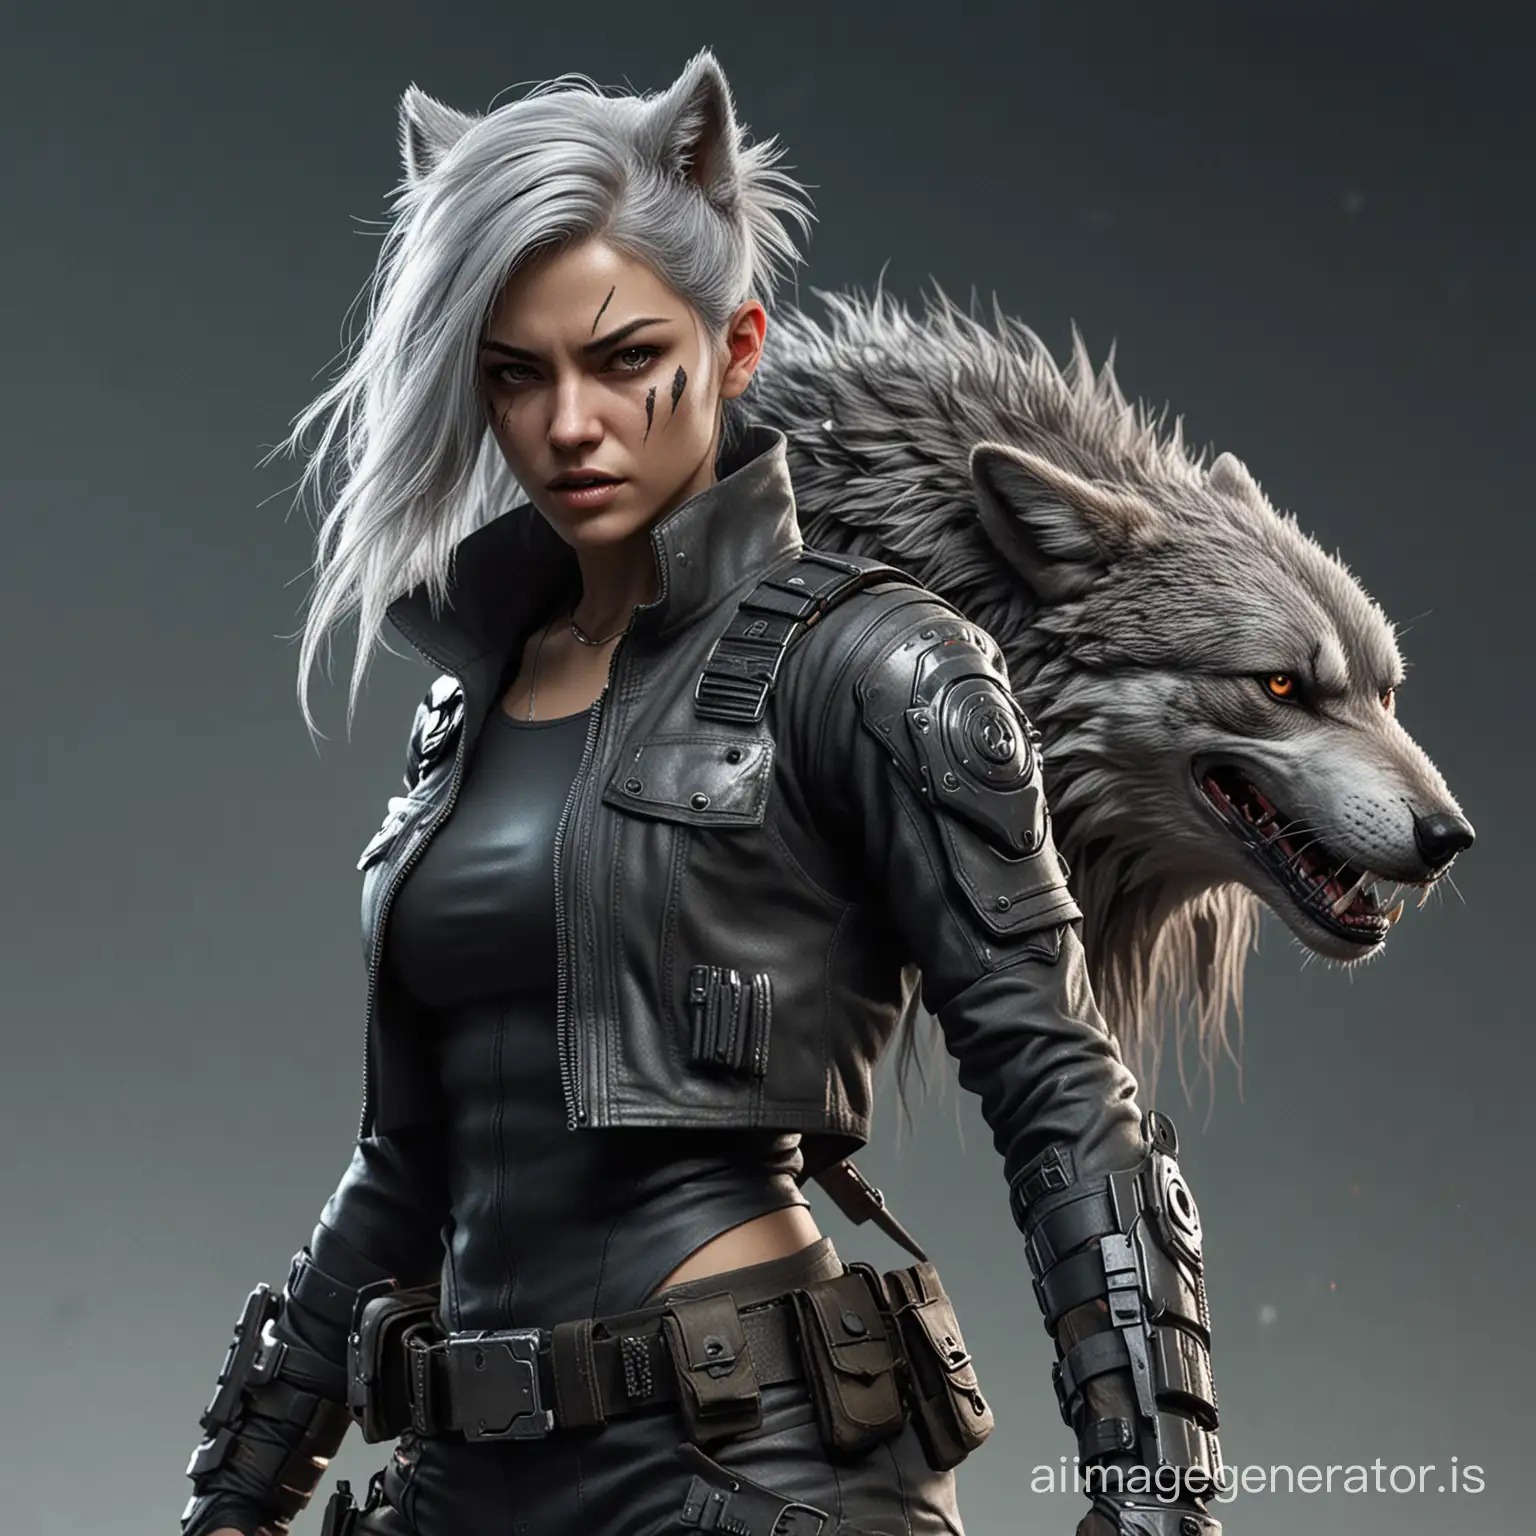 Cyberpunk-She-Wolf-Warrior-with-Grey-Hair